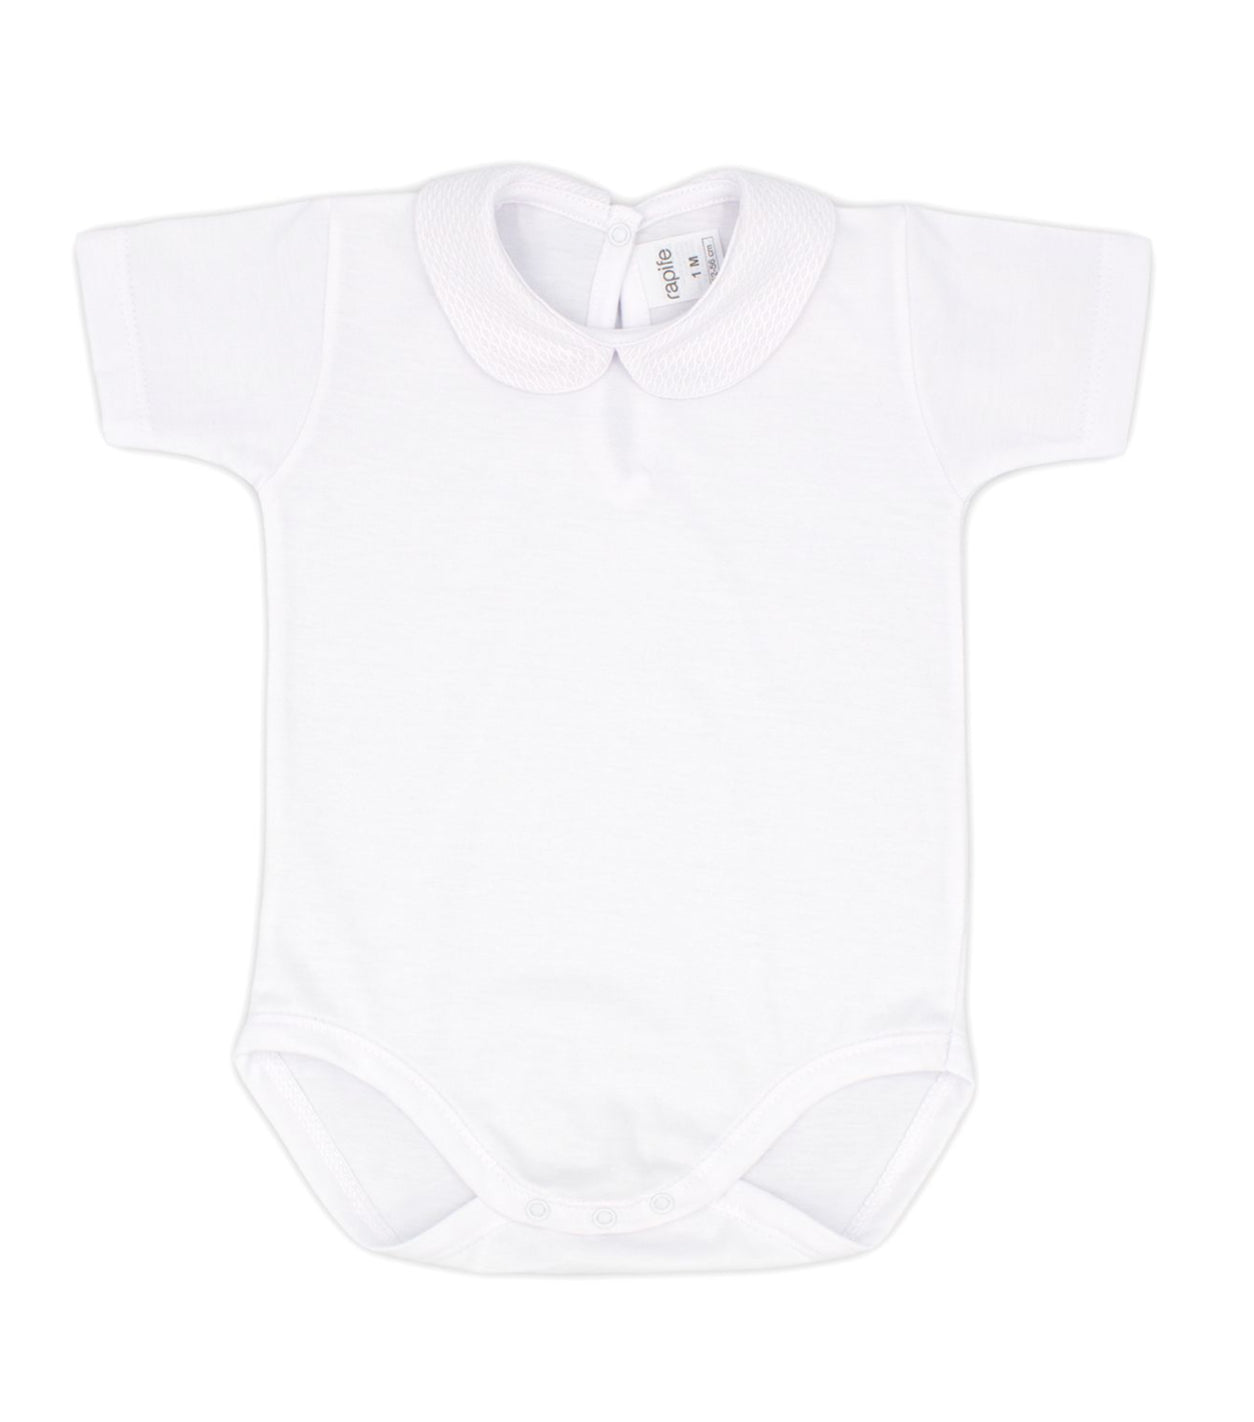 Rapife Baby Unisex White Cotton Short sleeve Body Top Peter Pan Collar